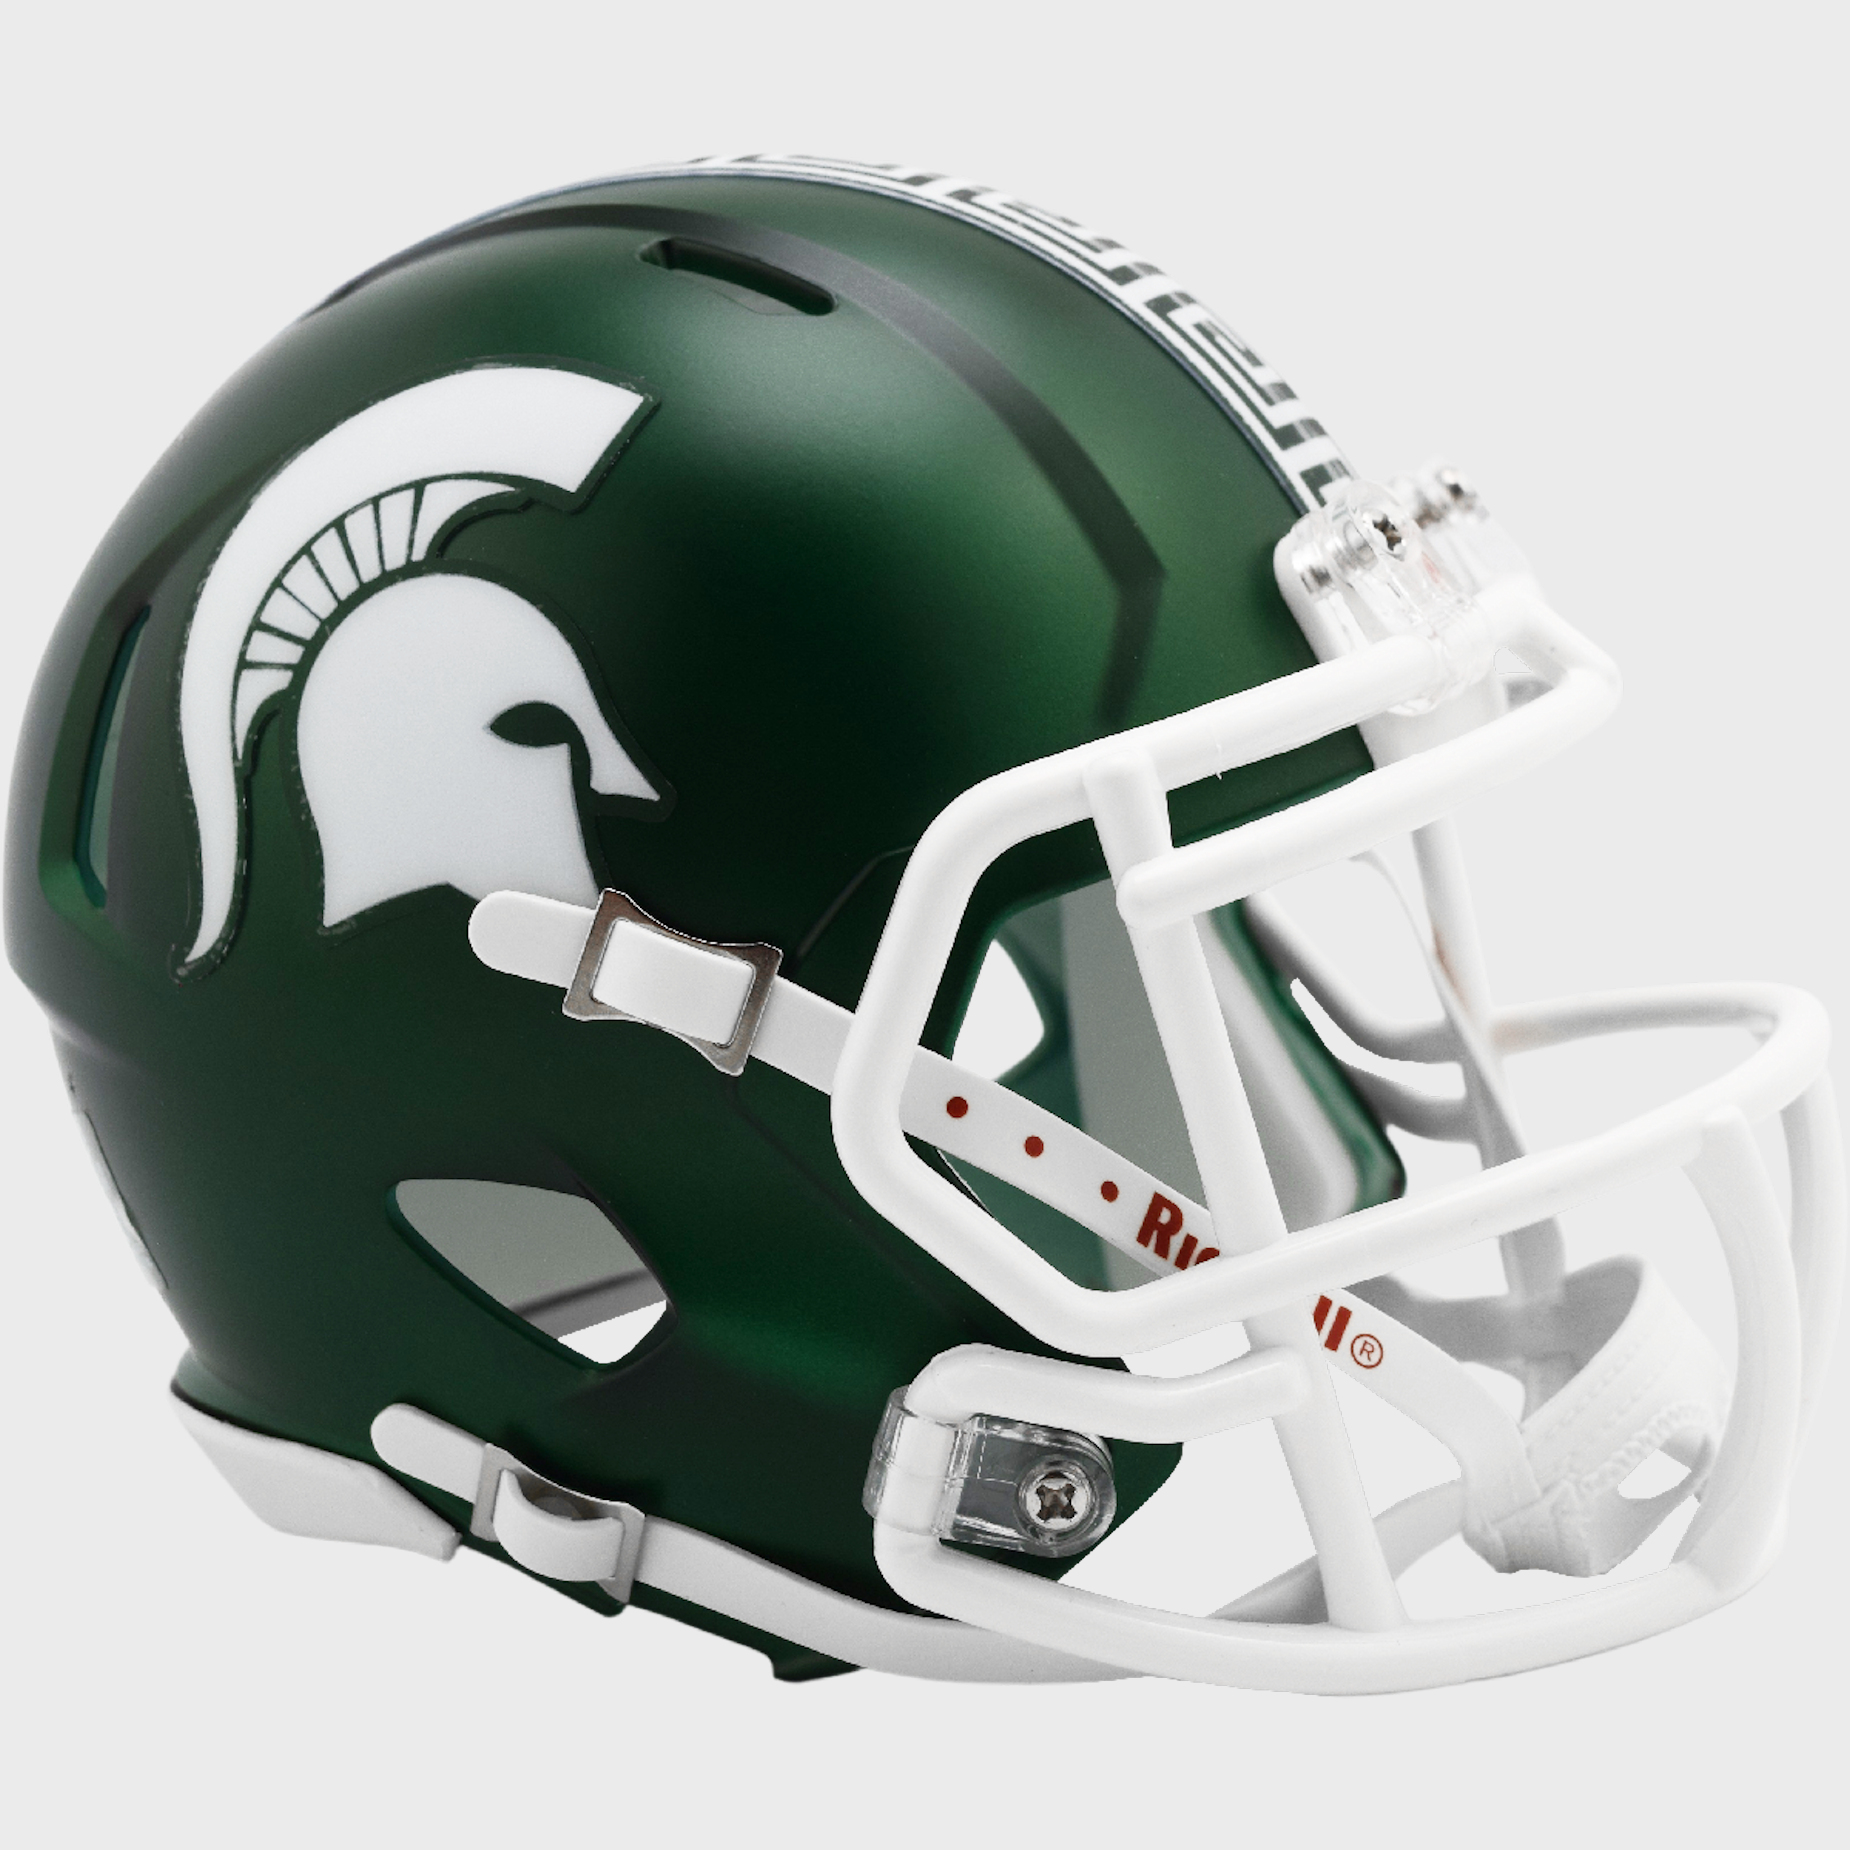 Michigan State Spartans mini helmet